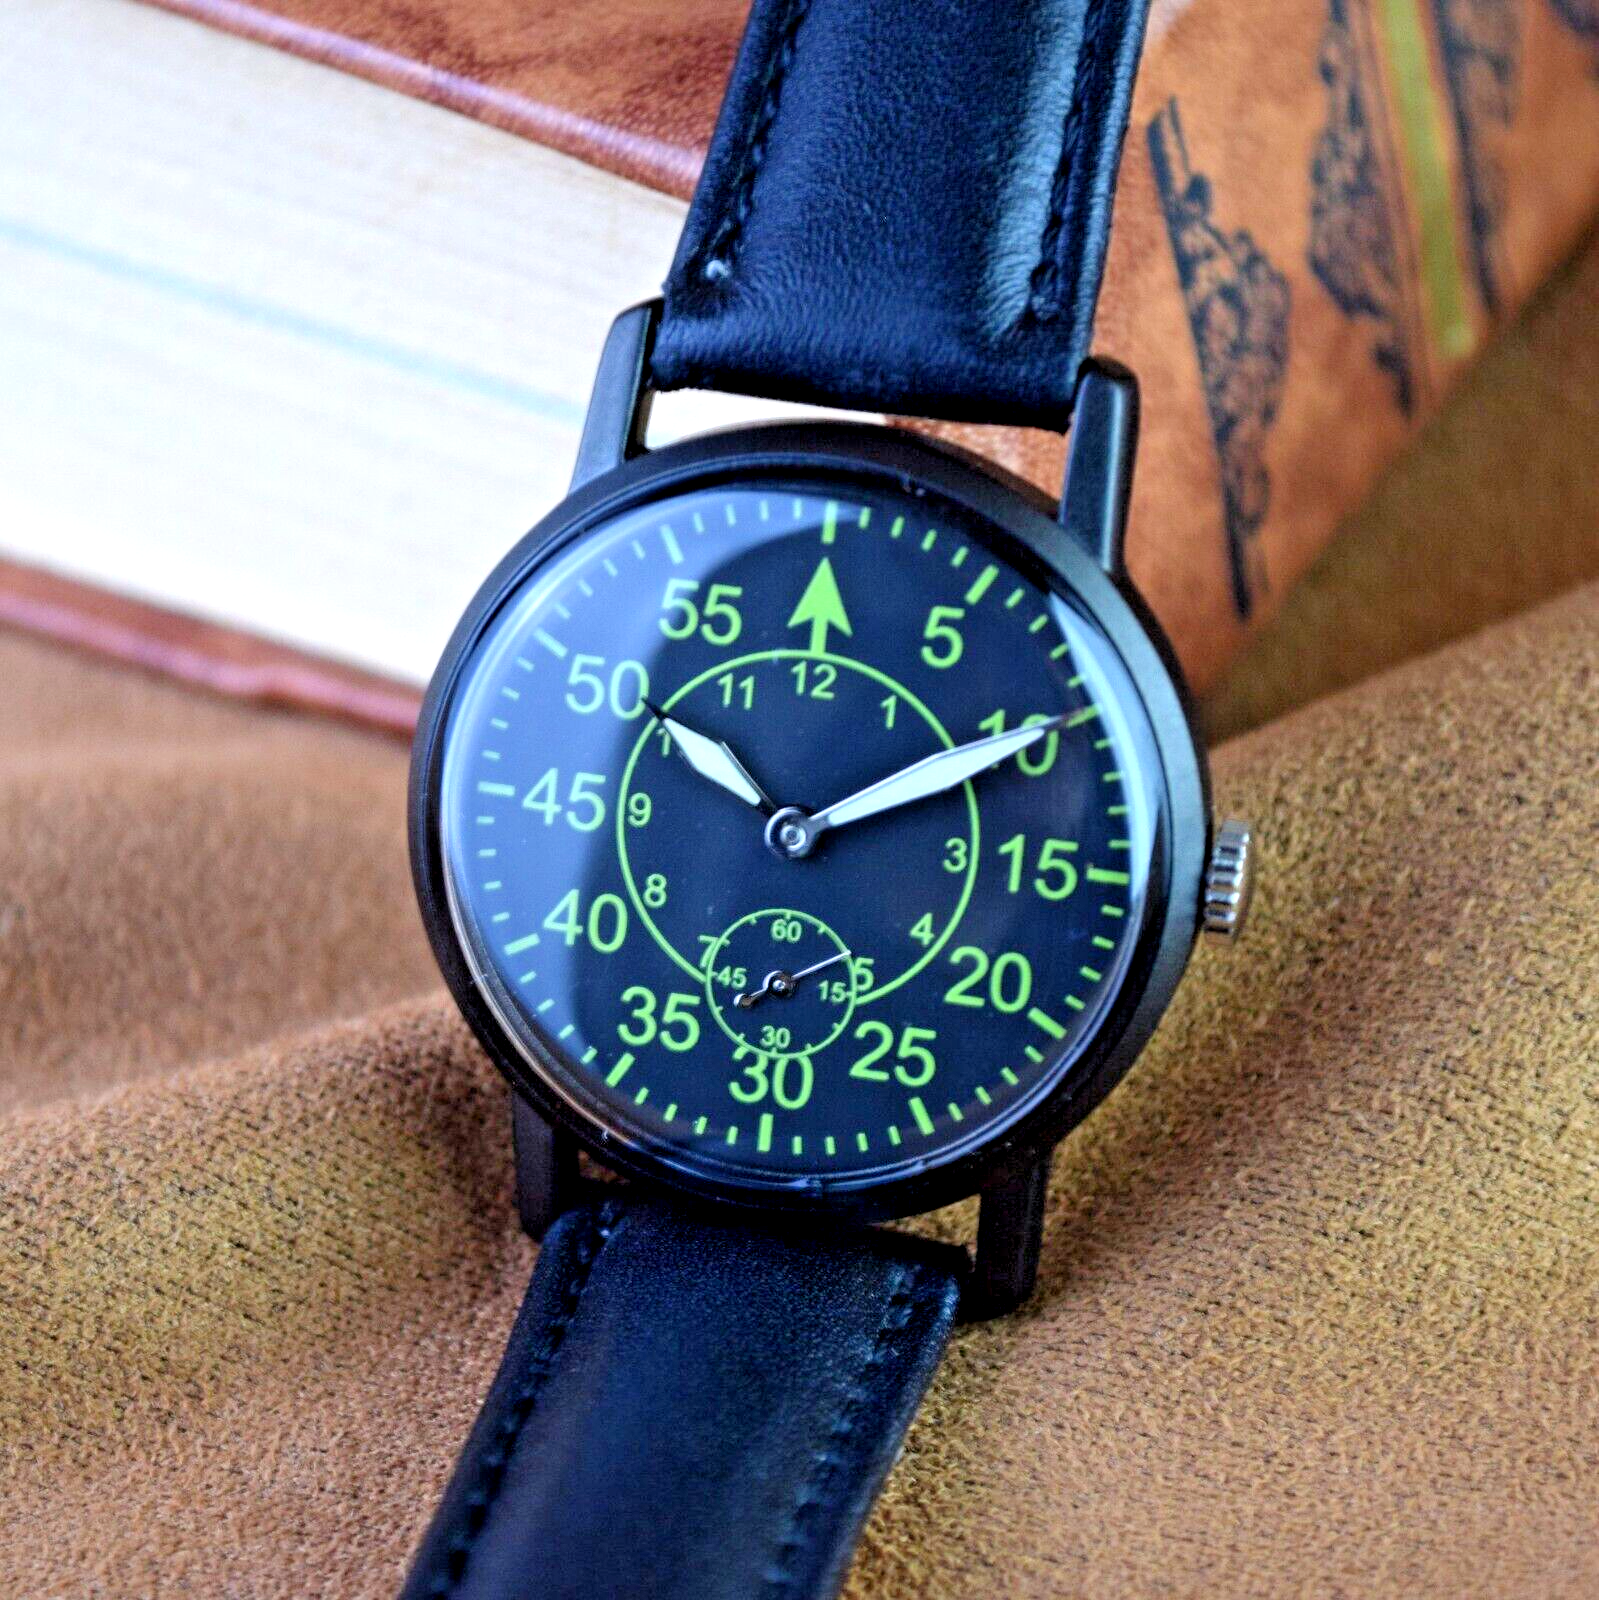 Soviet Watch Pobeda Pilot ZIM Men's Mechanical MILITARY Wrist watch Soviet USSR